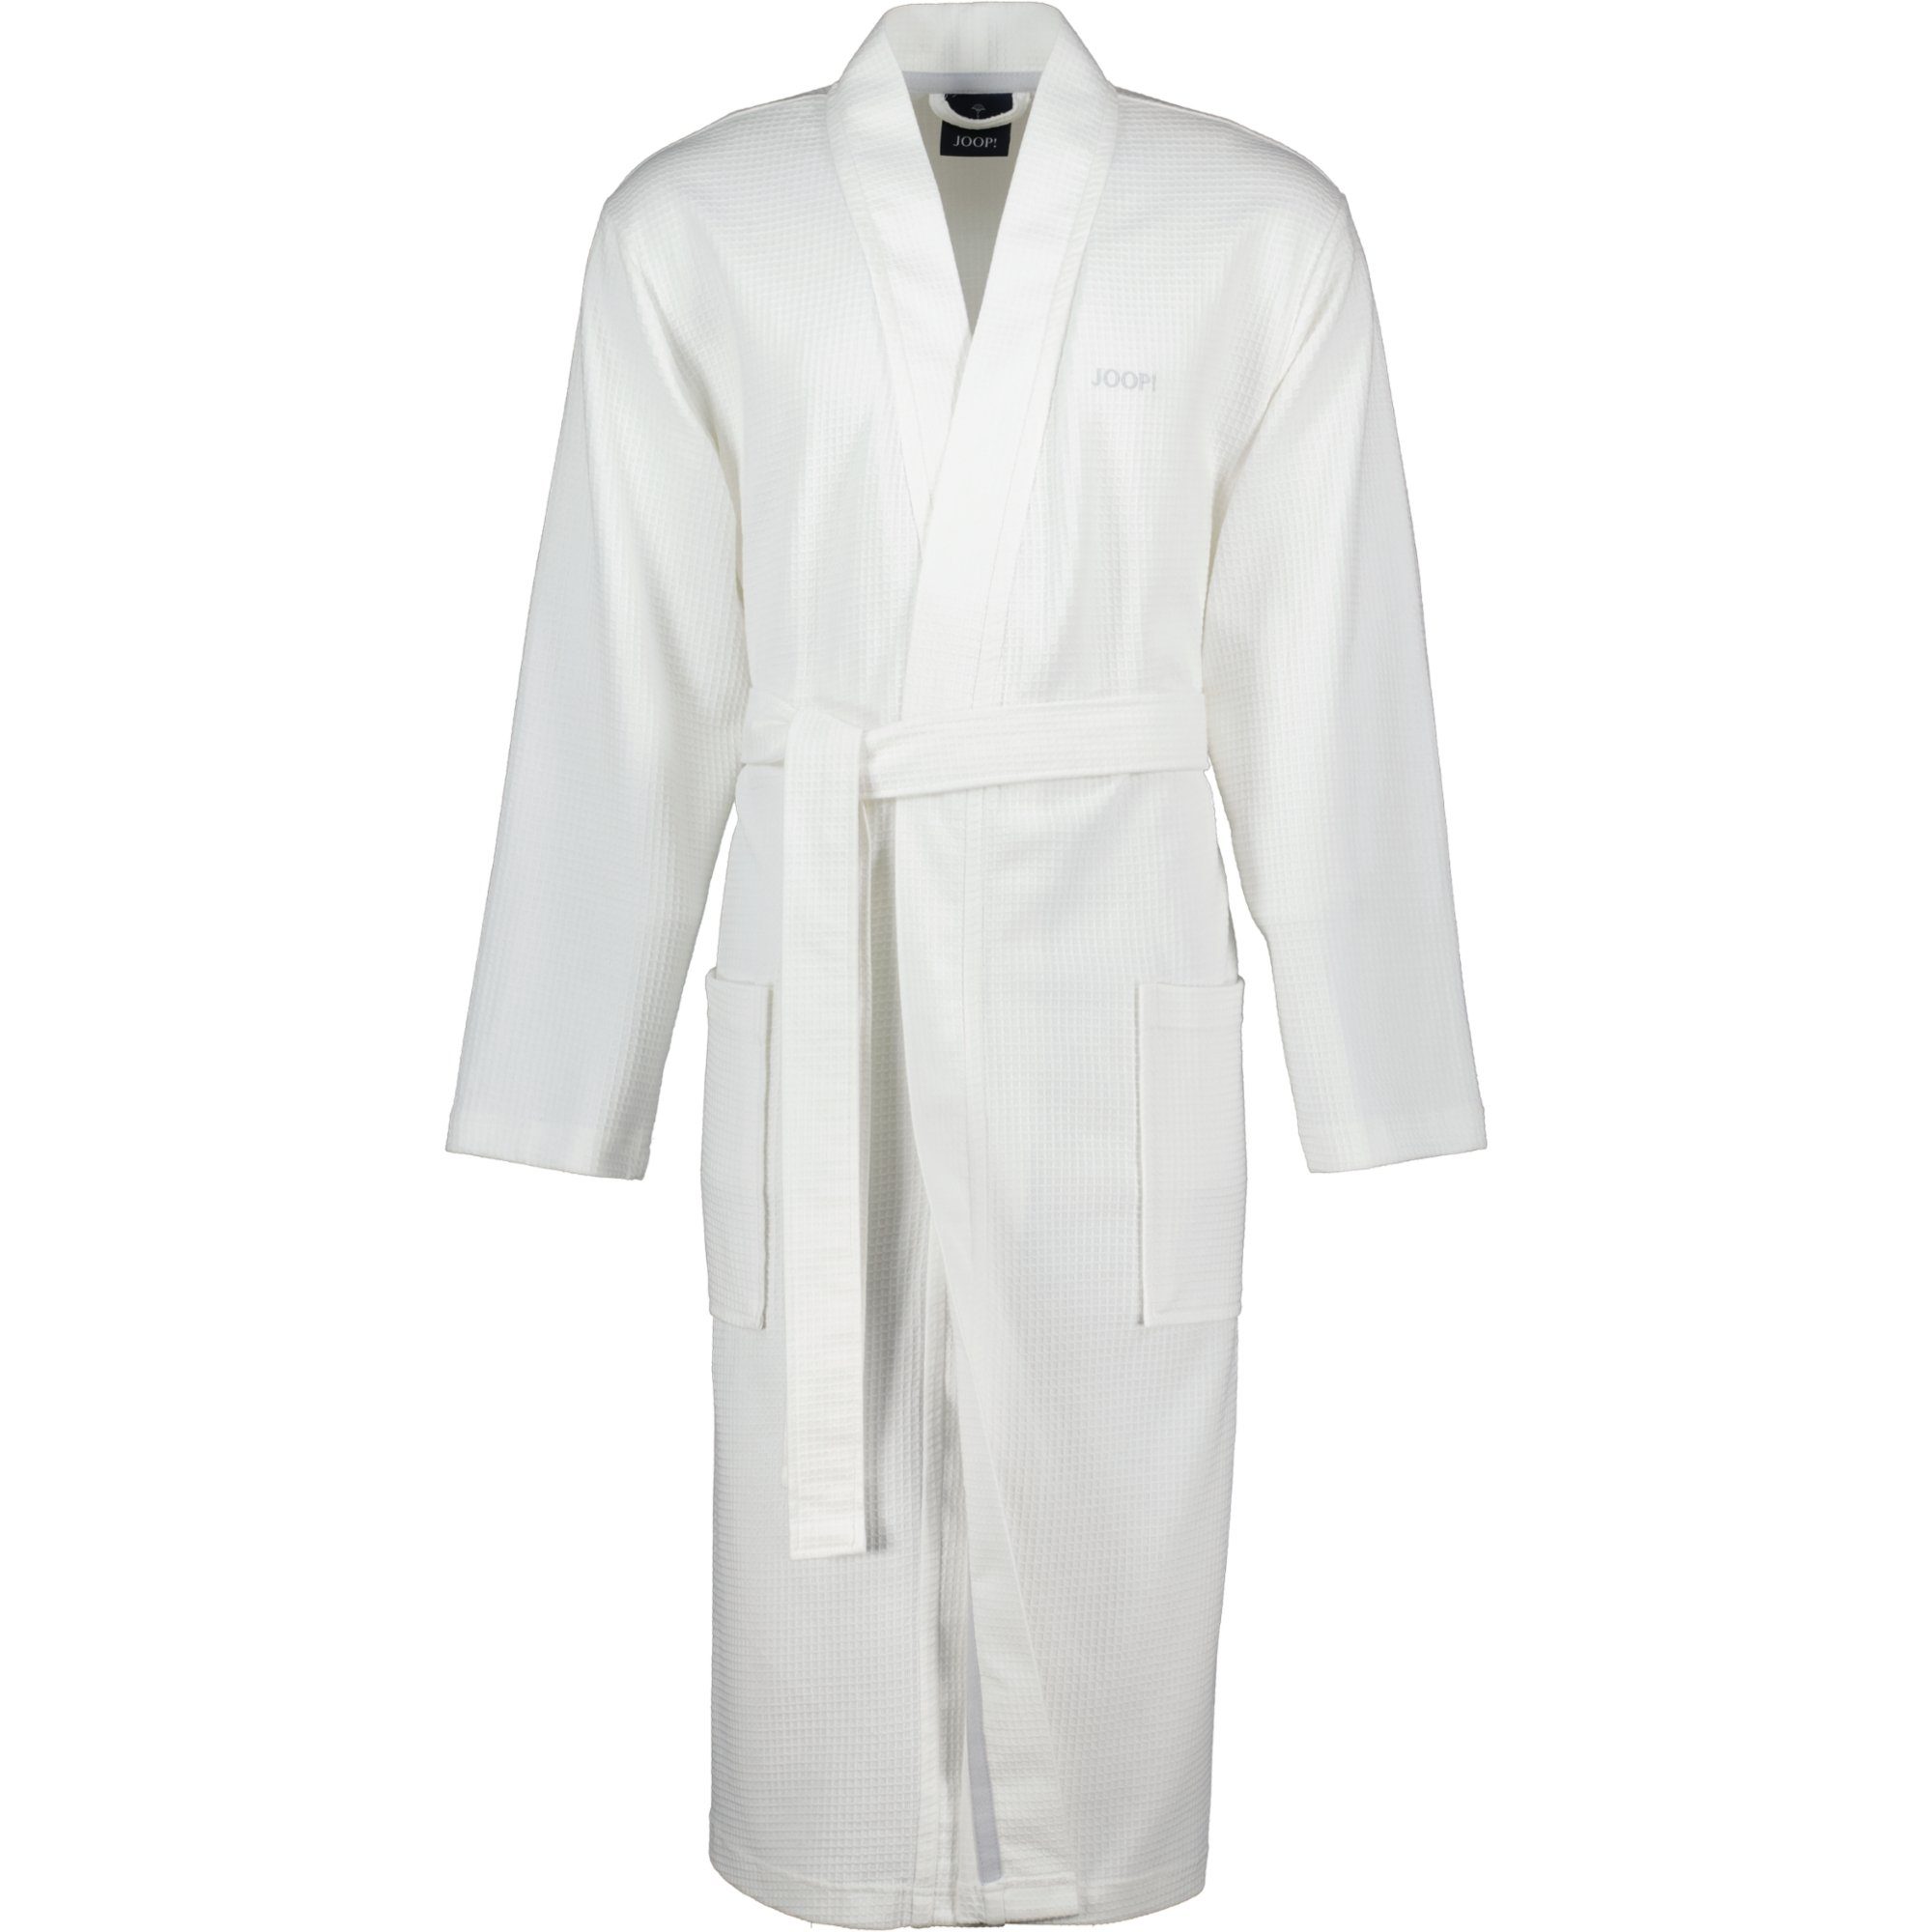 Joop! Herrenbademantel Pique 1656 Kimono Kimono, Weiß (600) 100% Baumwolle Pique